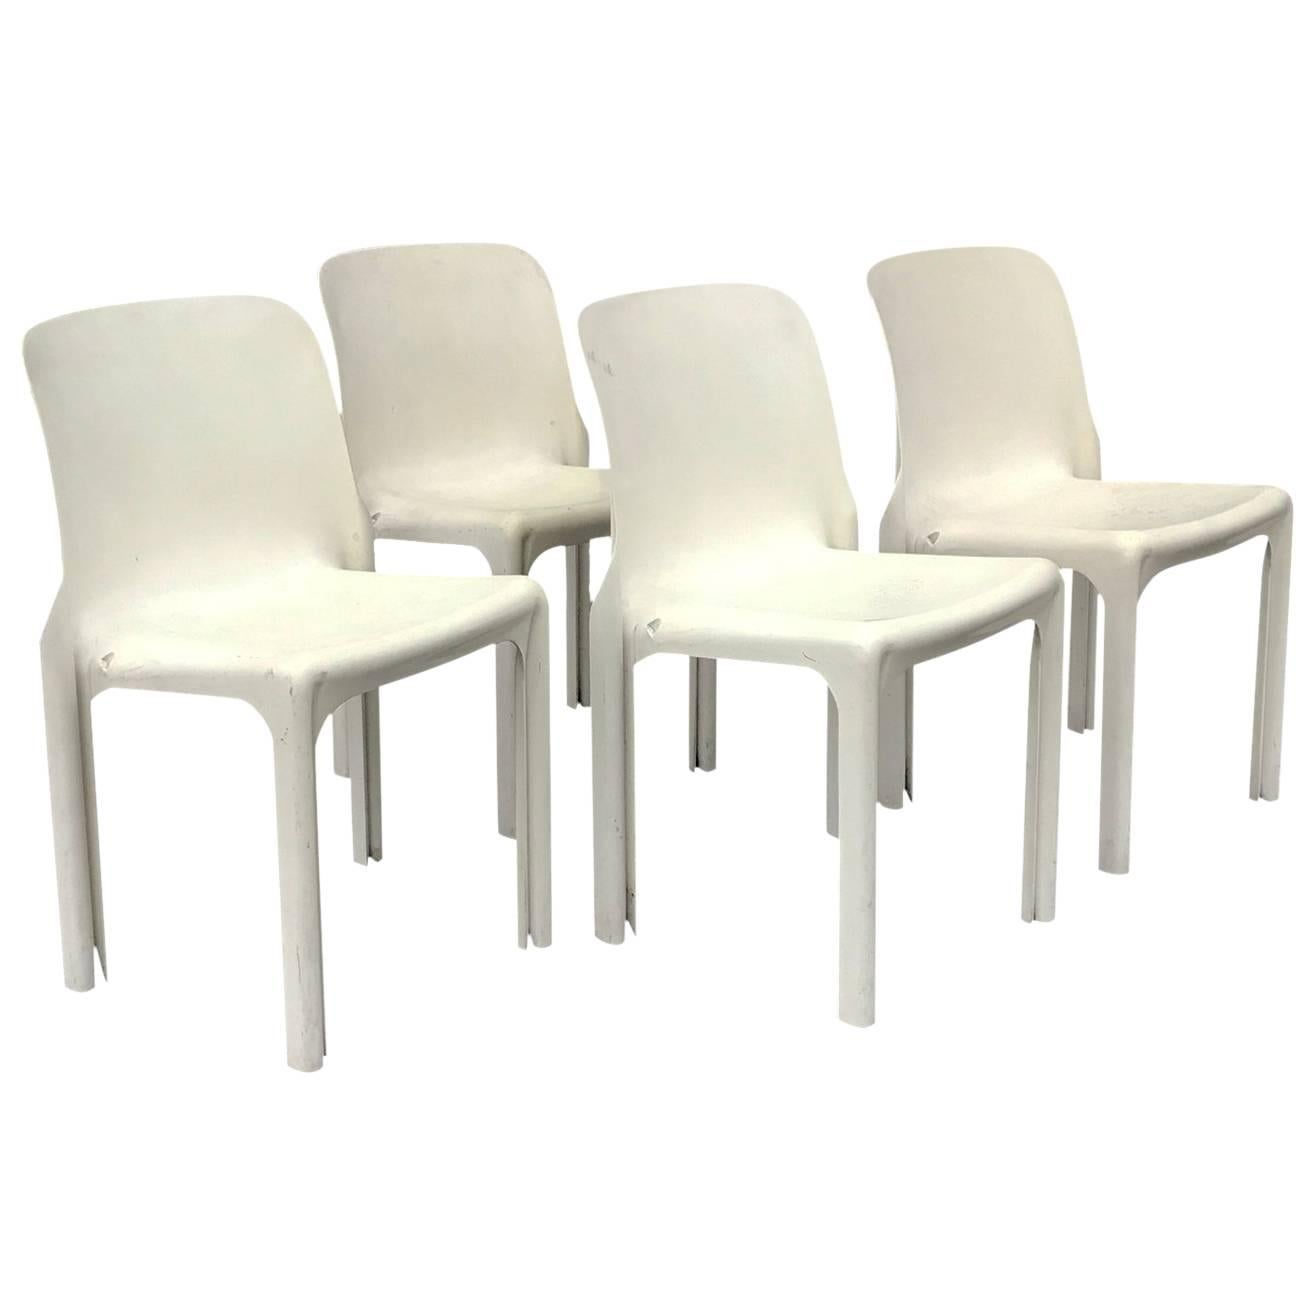 1969, Vico Magistretti for Artemide, Set of Four White Selene Chairs